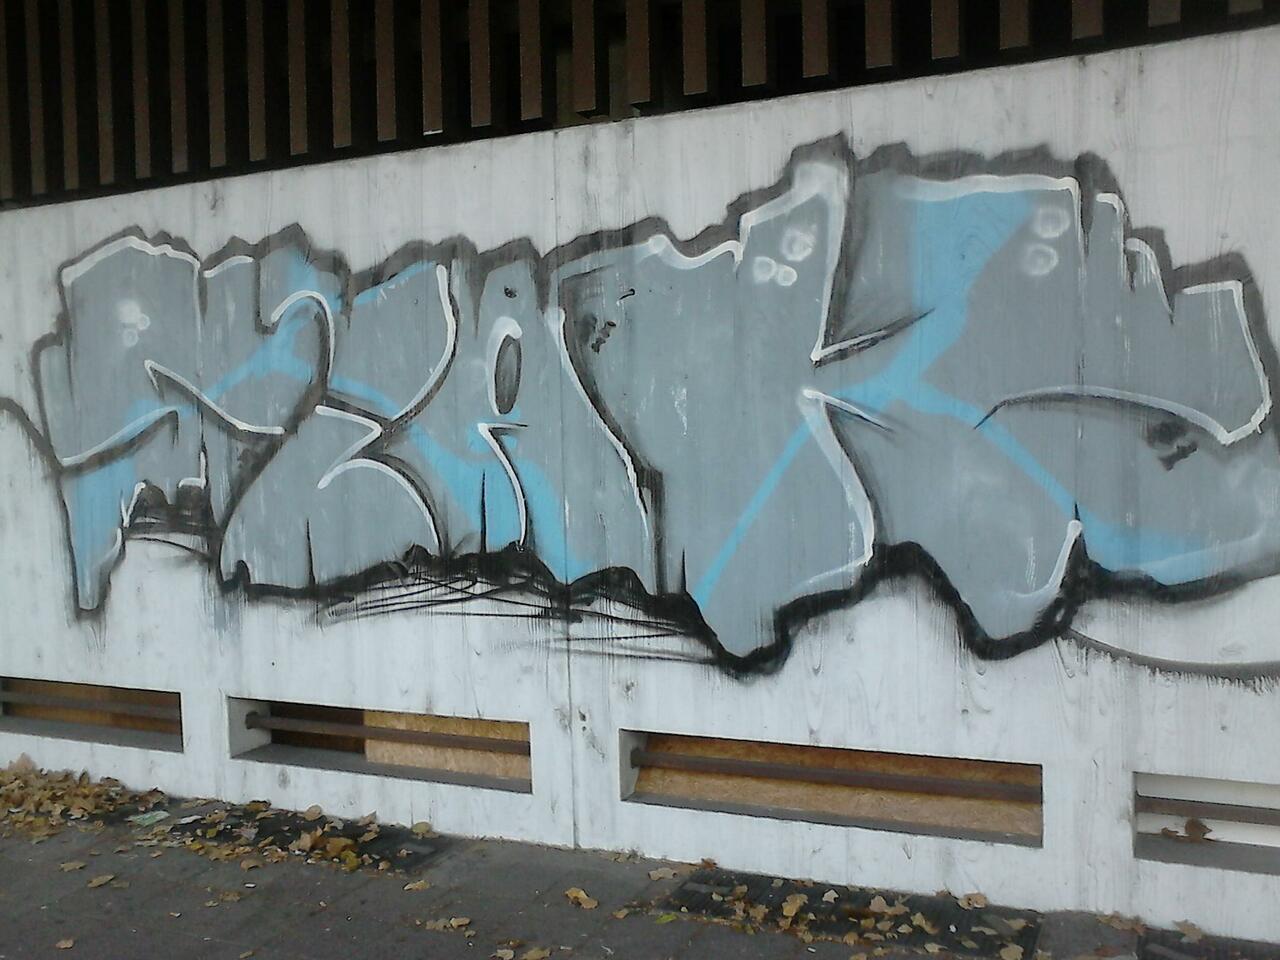 Graffiti Karlsruhe, Germany 
#streetart #art #urbanart #graffiti #karlsruhe http://t.co/uxAlPPHUQD